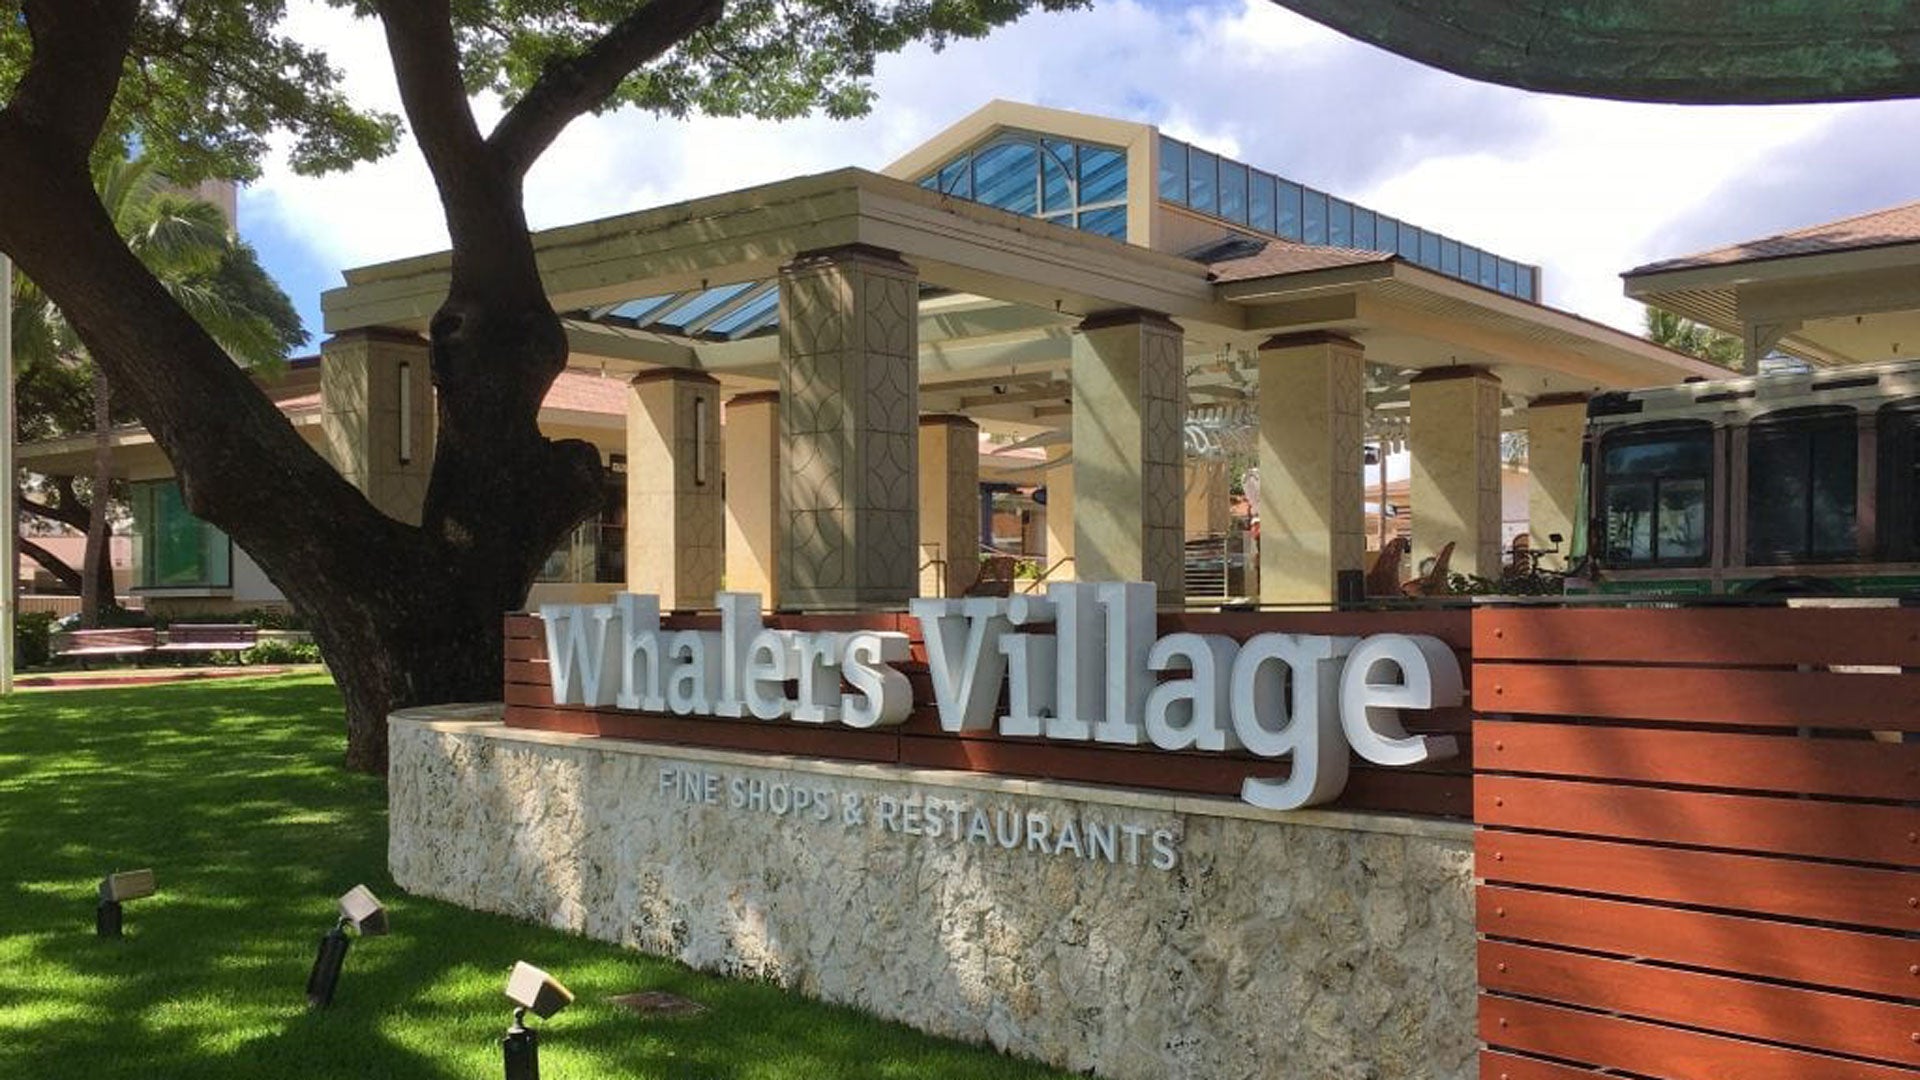 Whalers Village